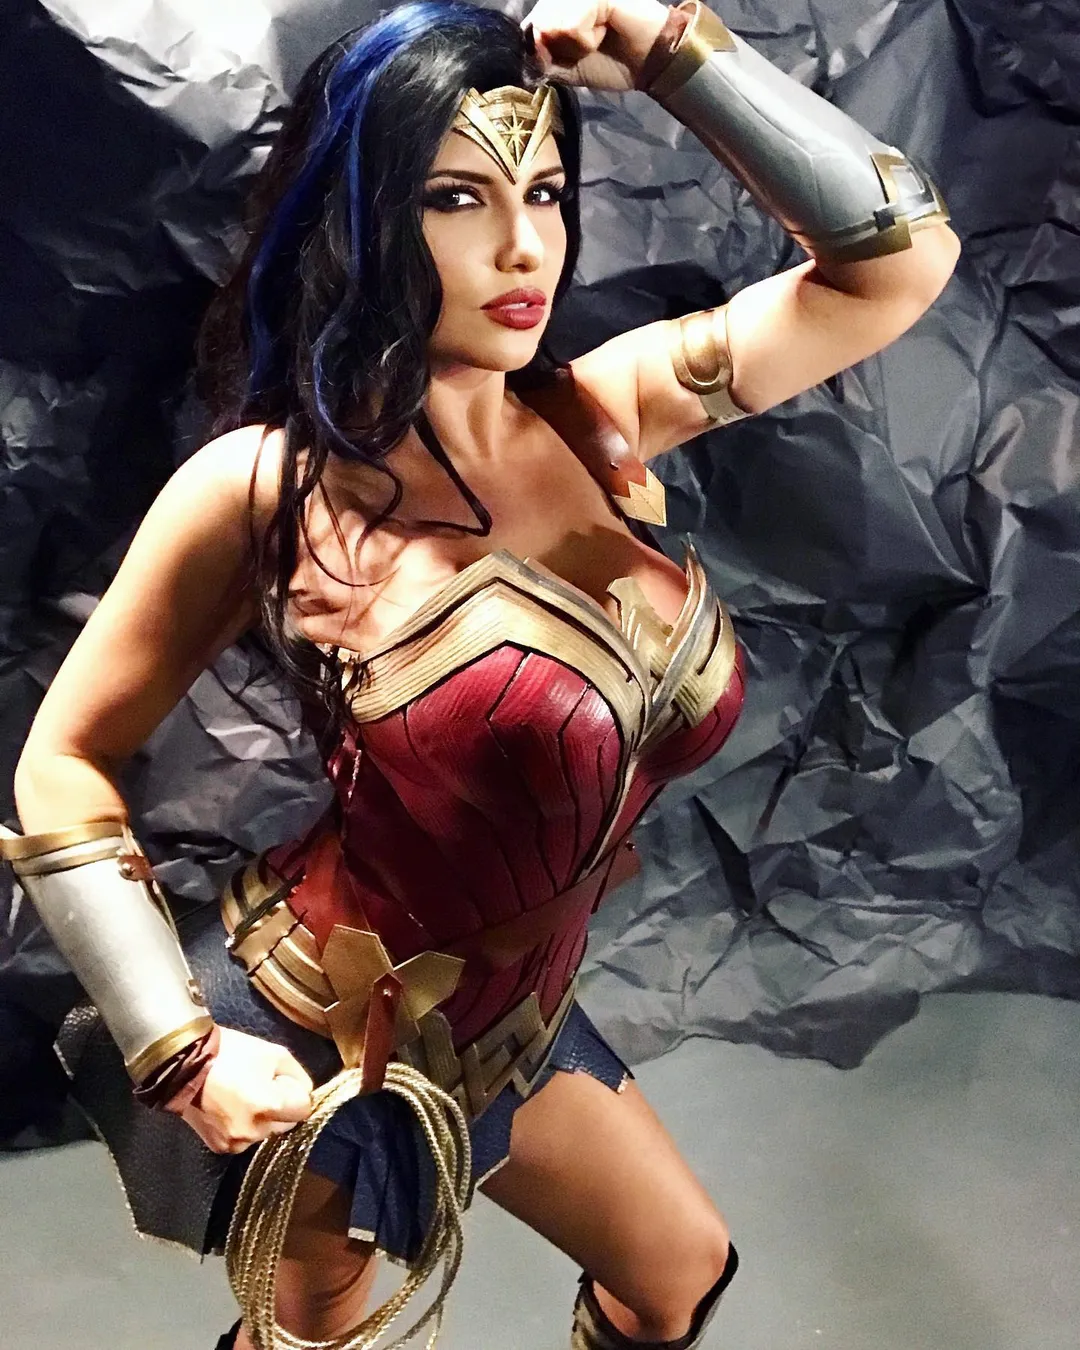 Romi Rain dressed up as Wonder Woman.